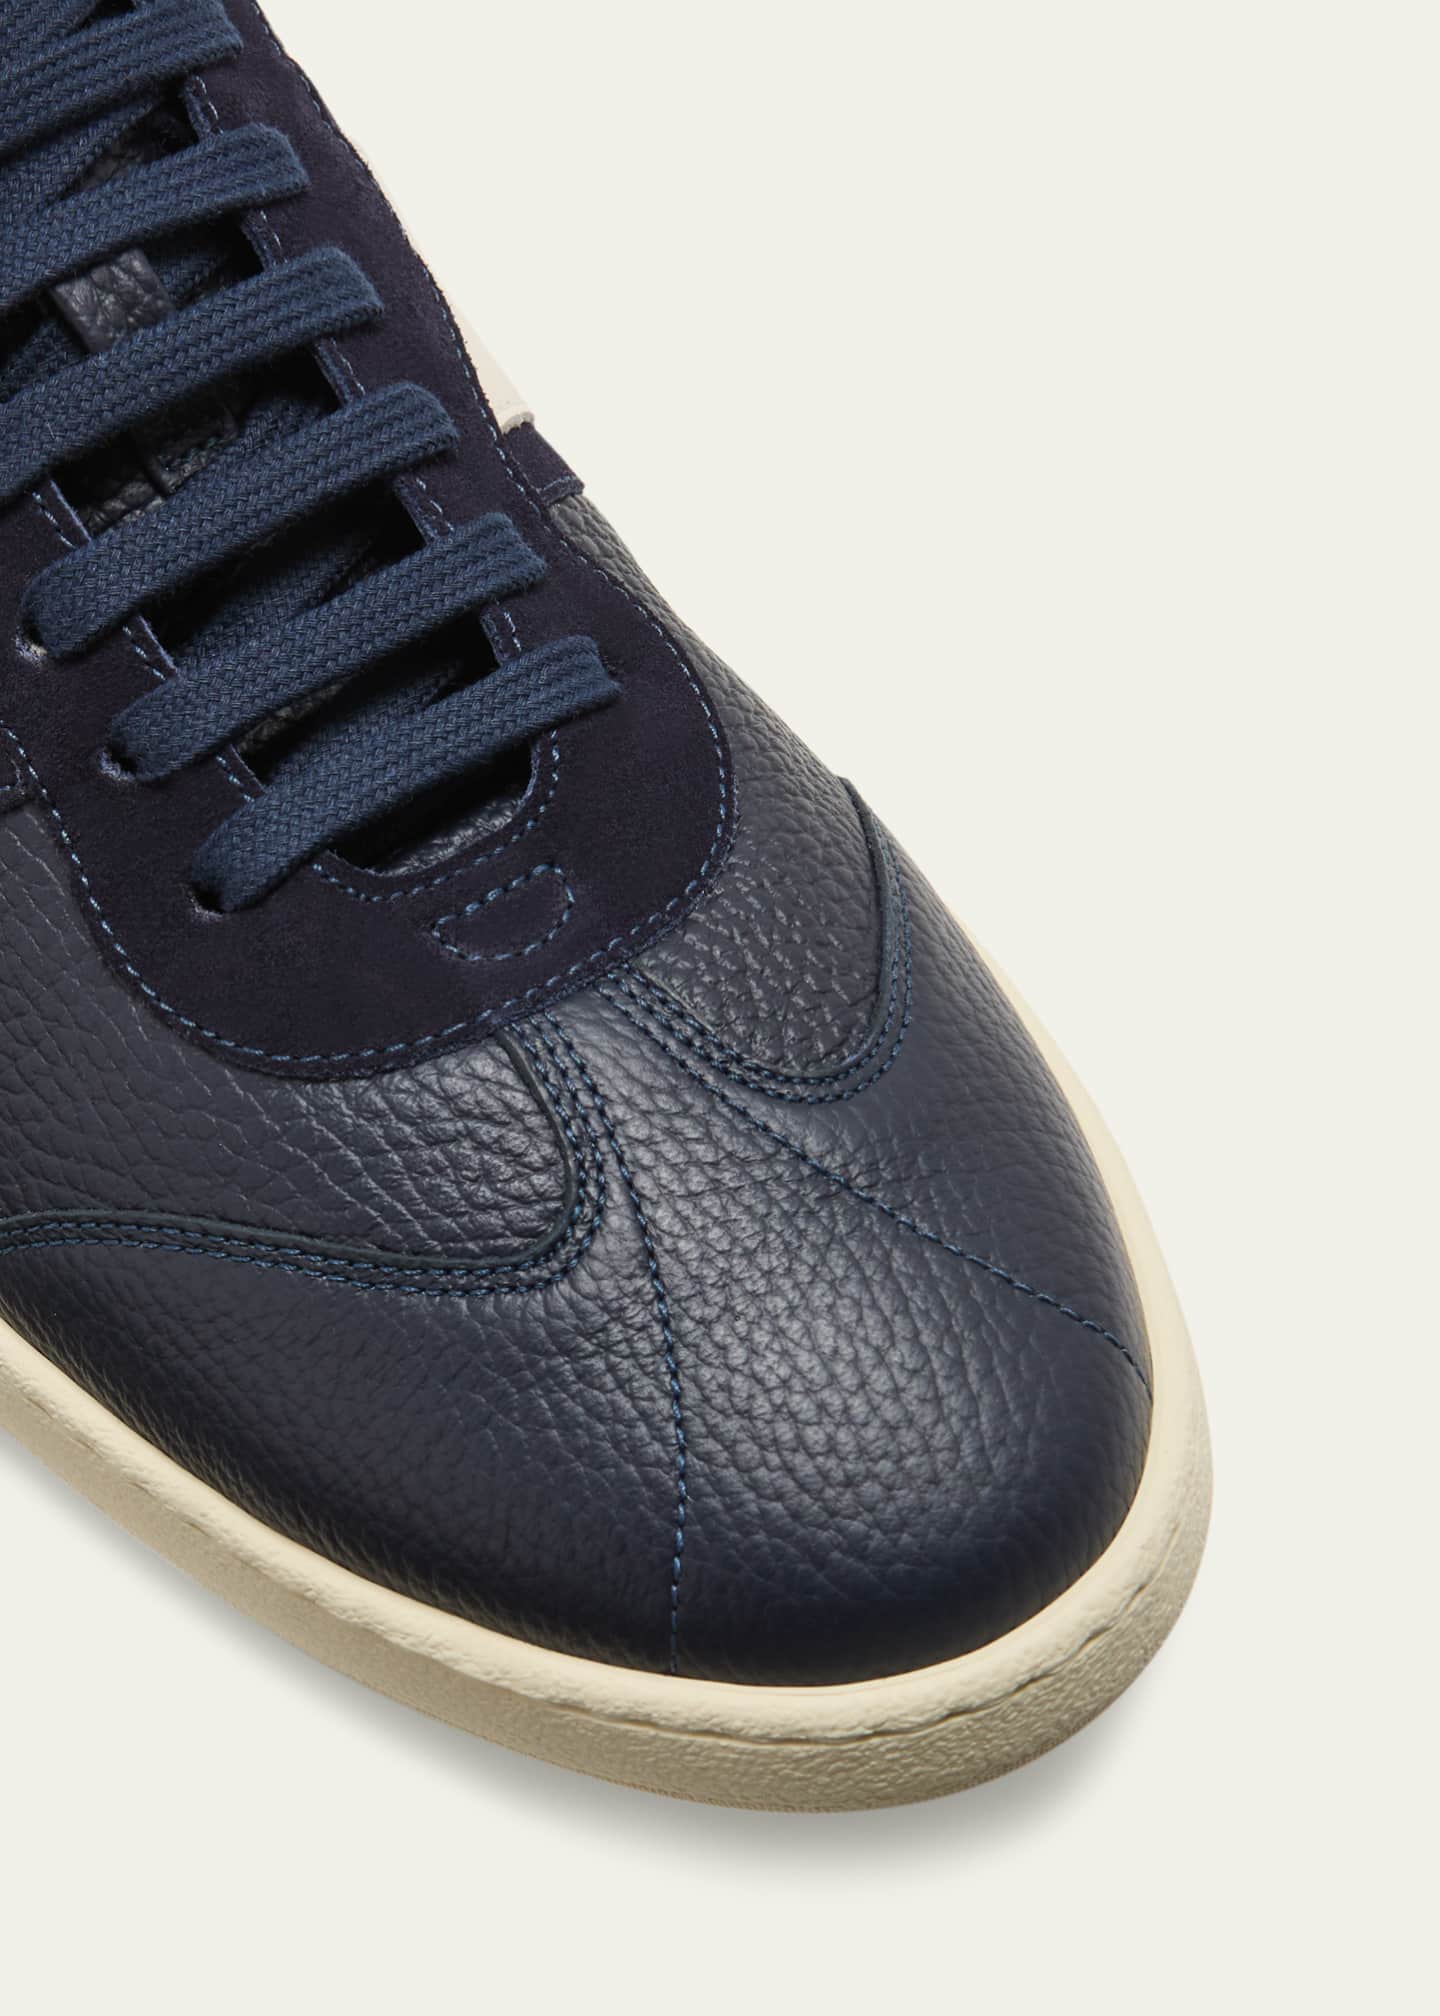 Ferragamo Men's Achille 1 Leather Low-Top Sneakers - Bergdorf Goodman